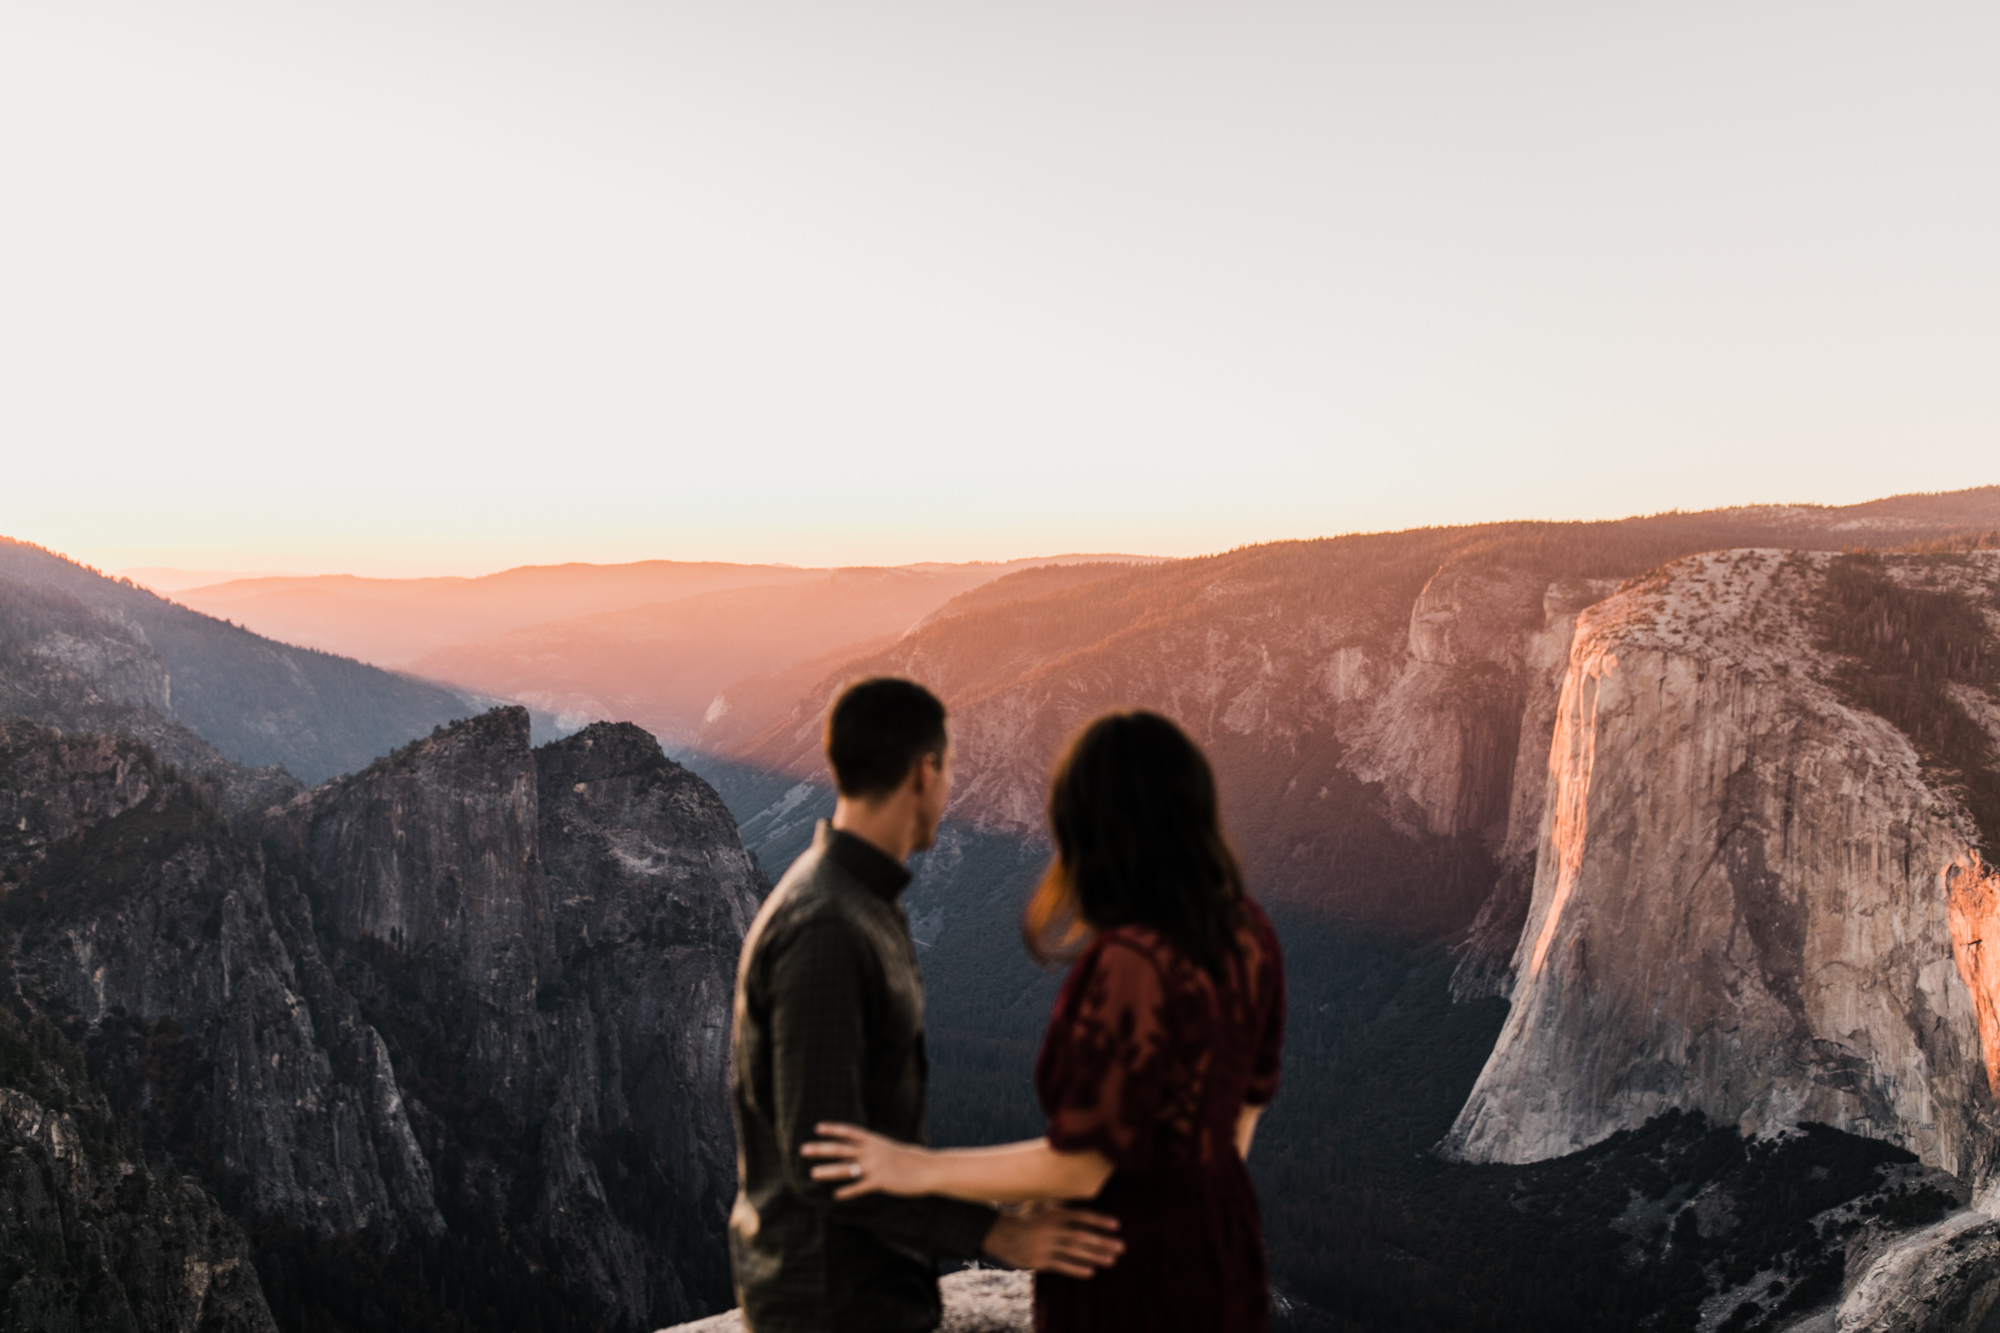 rachel + seth's adventurous taft point engagement session | yosemite national park | california adventure elopement photographer | the hearnes adventure photography | www.thehearnes.com